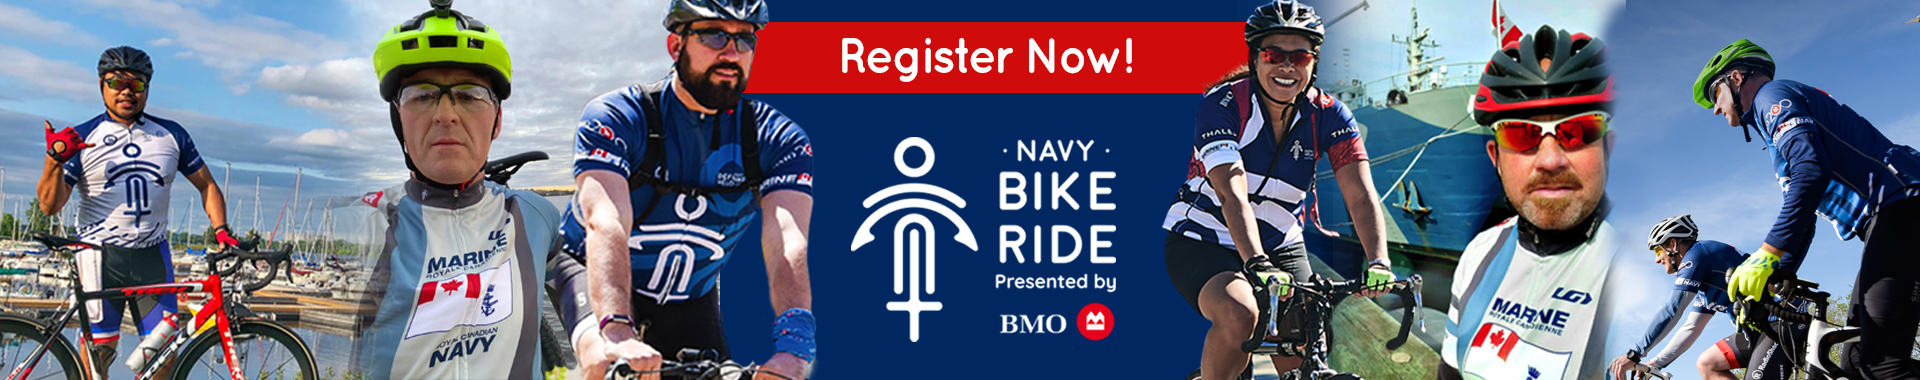 Navy Bike Ride - Register now!